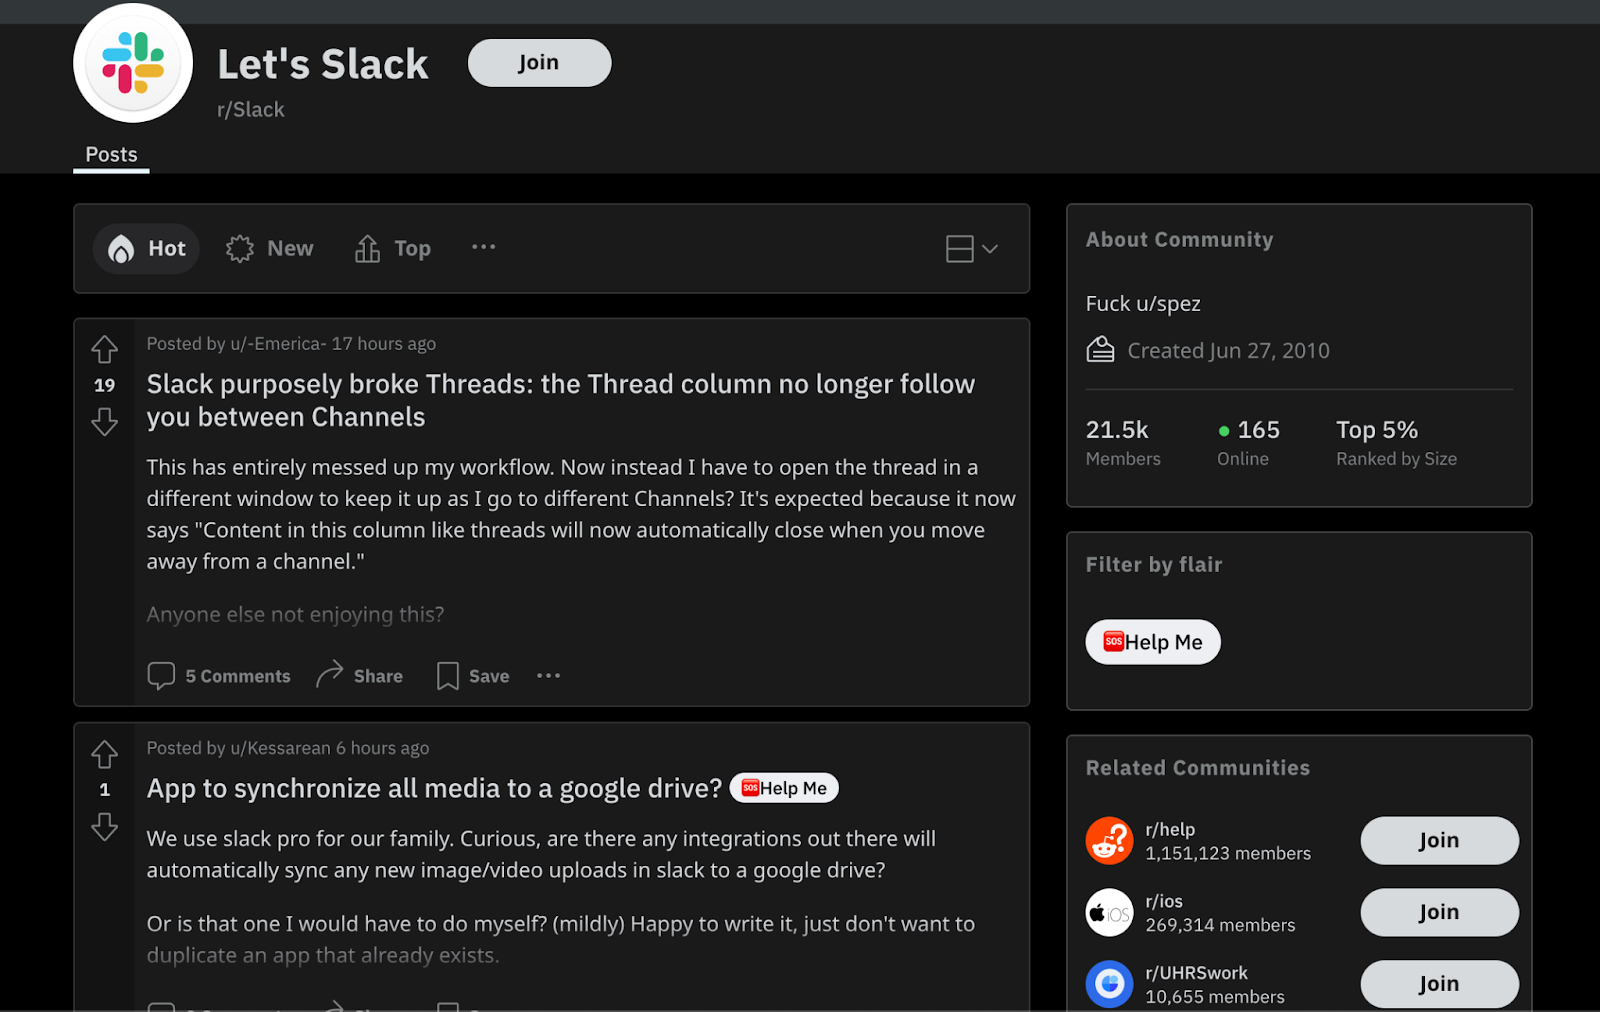 The Let's Slack subreddit has over 21,000 members